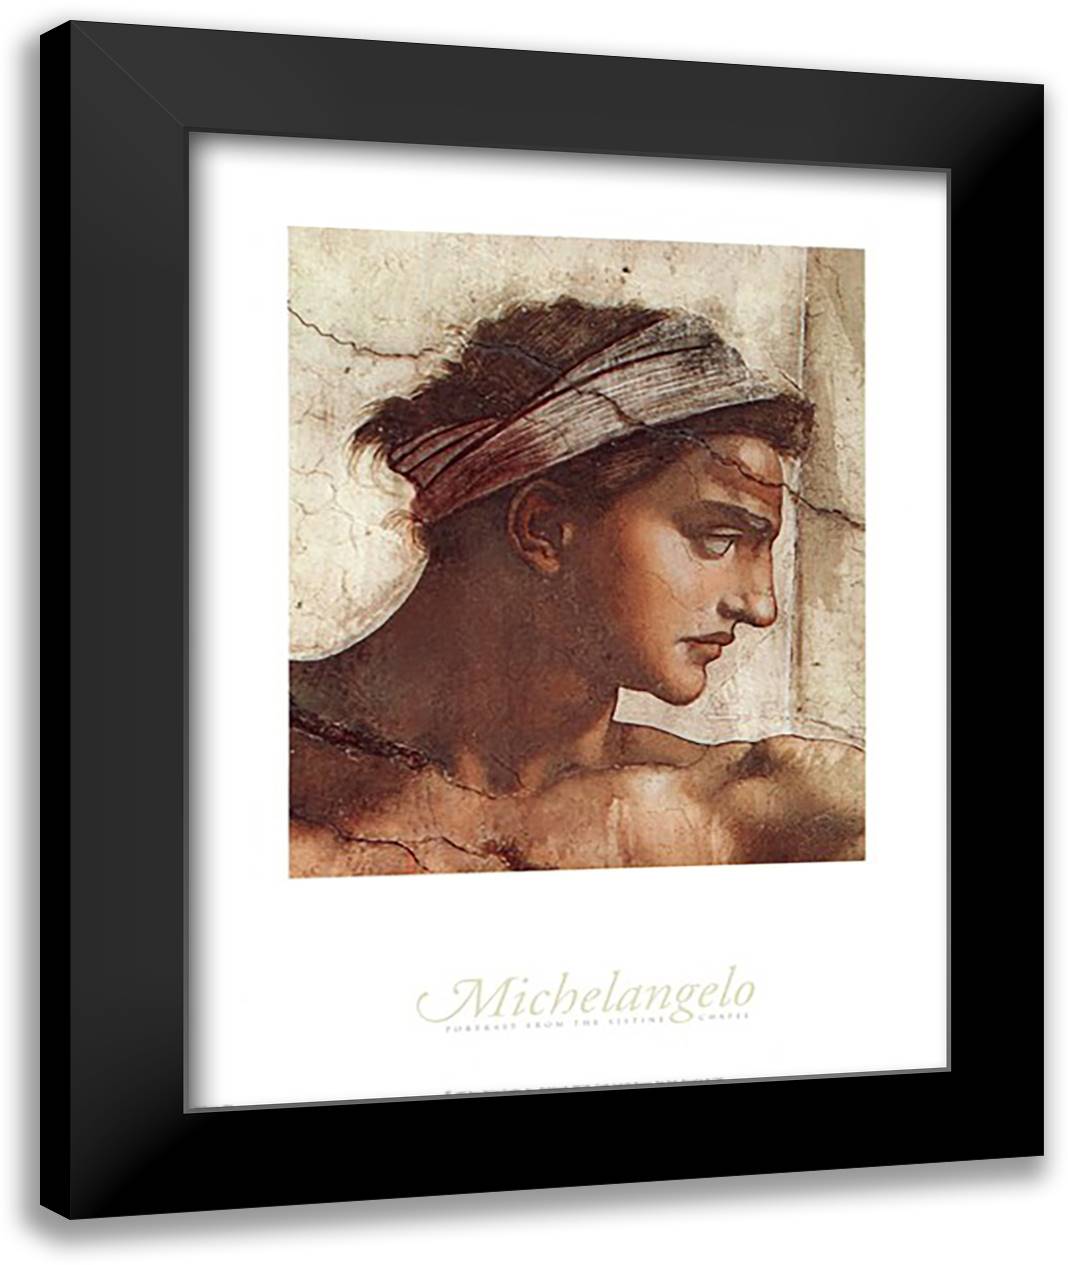 Nude I 13x16 Black Modern Wood Framed Art Print Poster by Michelangelo